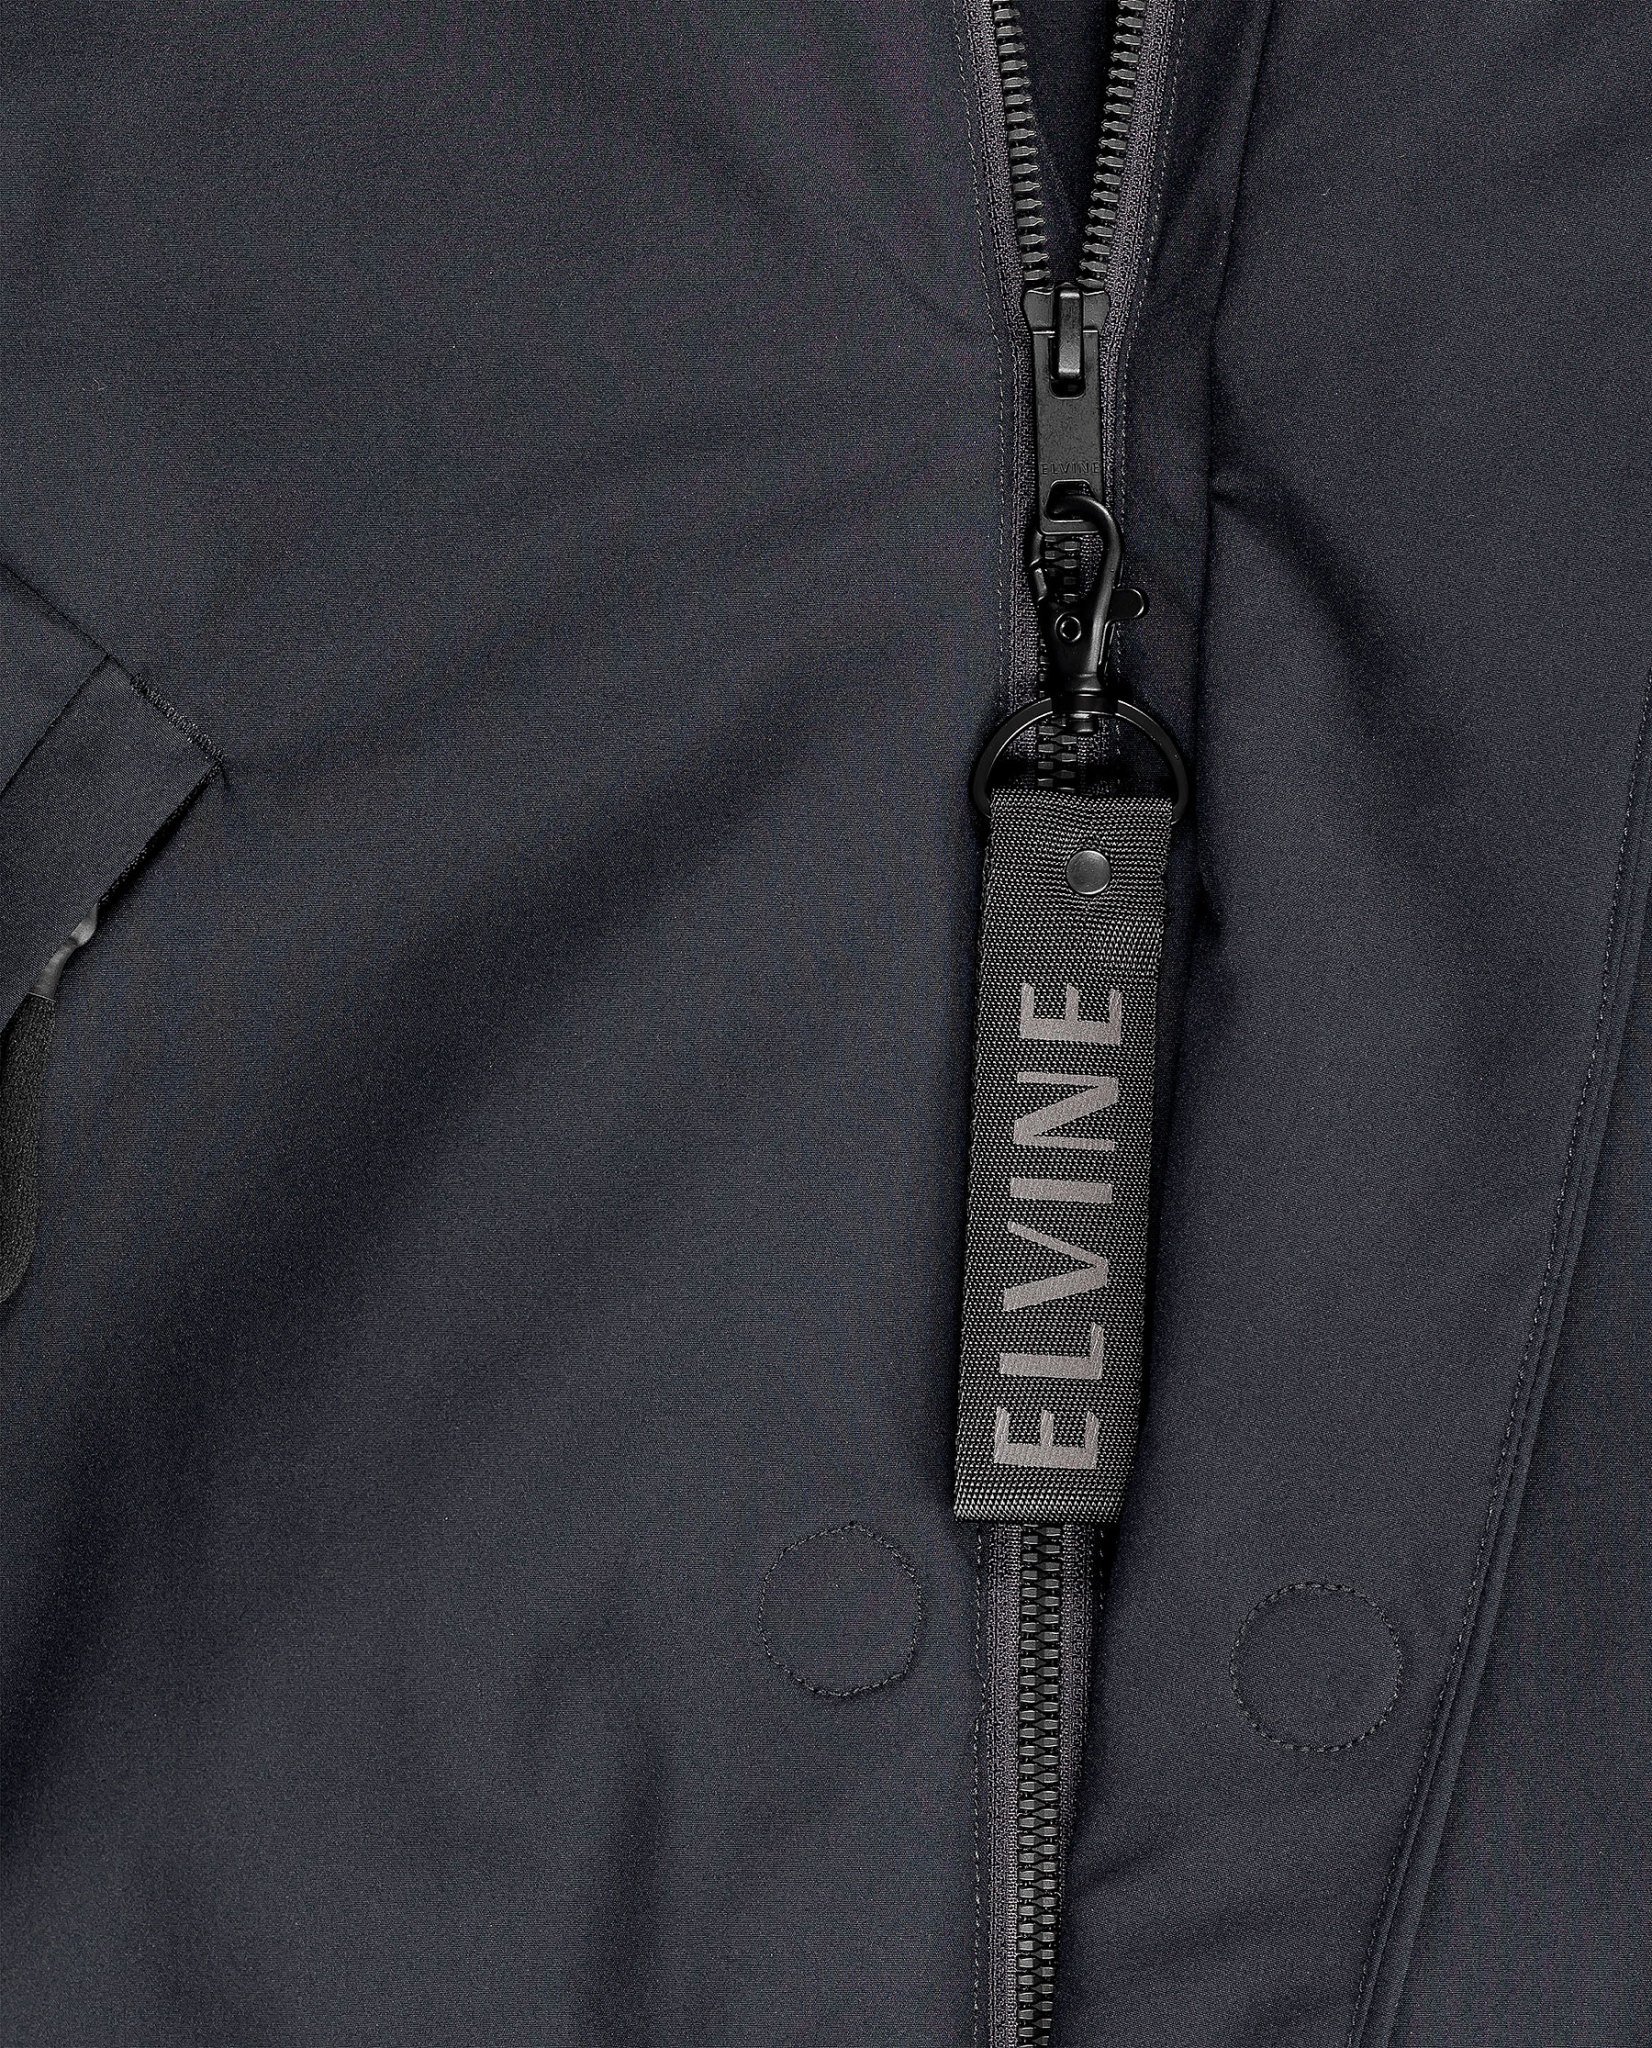 Elvine Elvine Zane Jacket Dark Navy